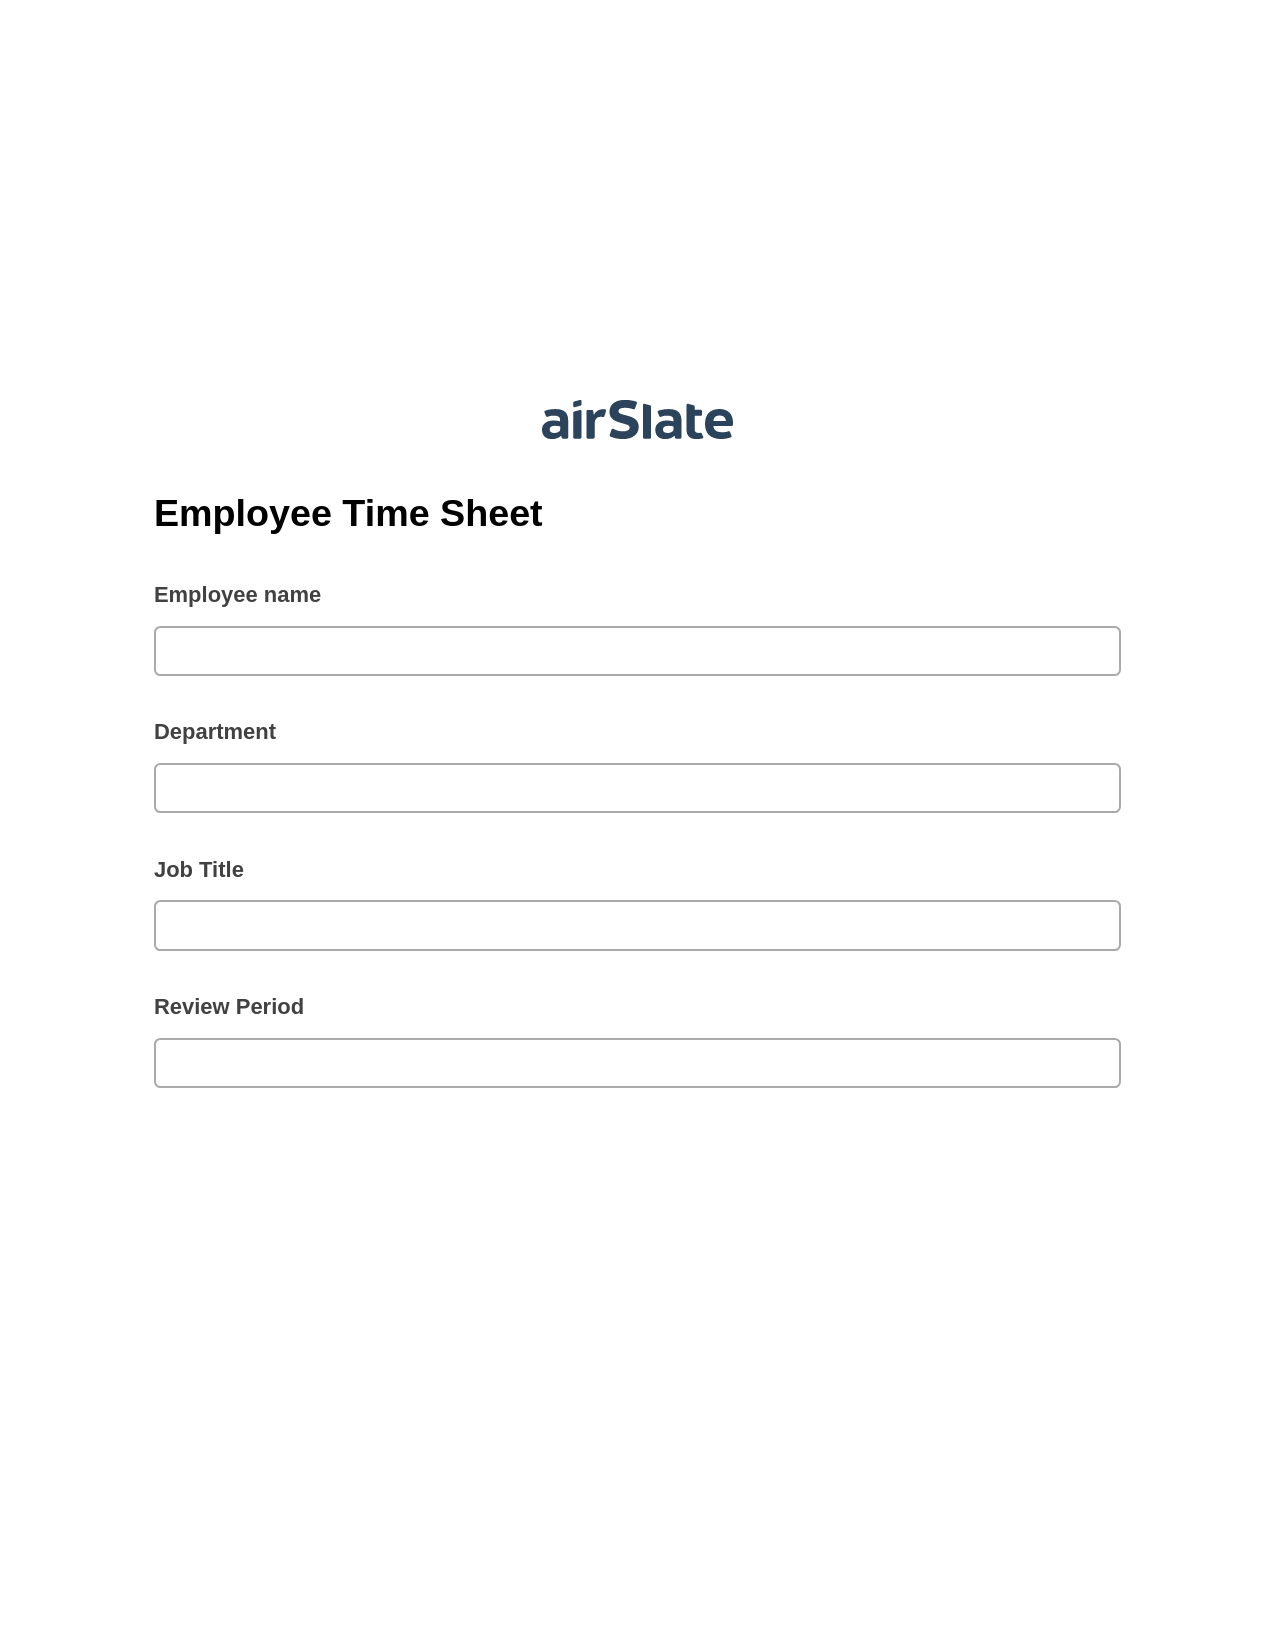 Multirole Employee Time Sheet Pre-fill Document Bot, Create Salesforce Records Bot, Email Notification Postfinish Bot